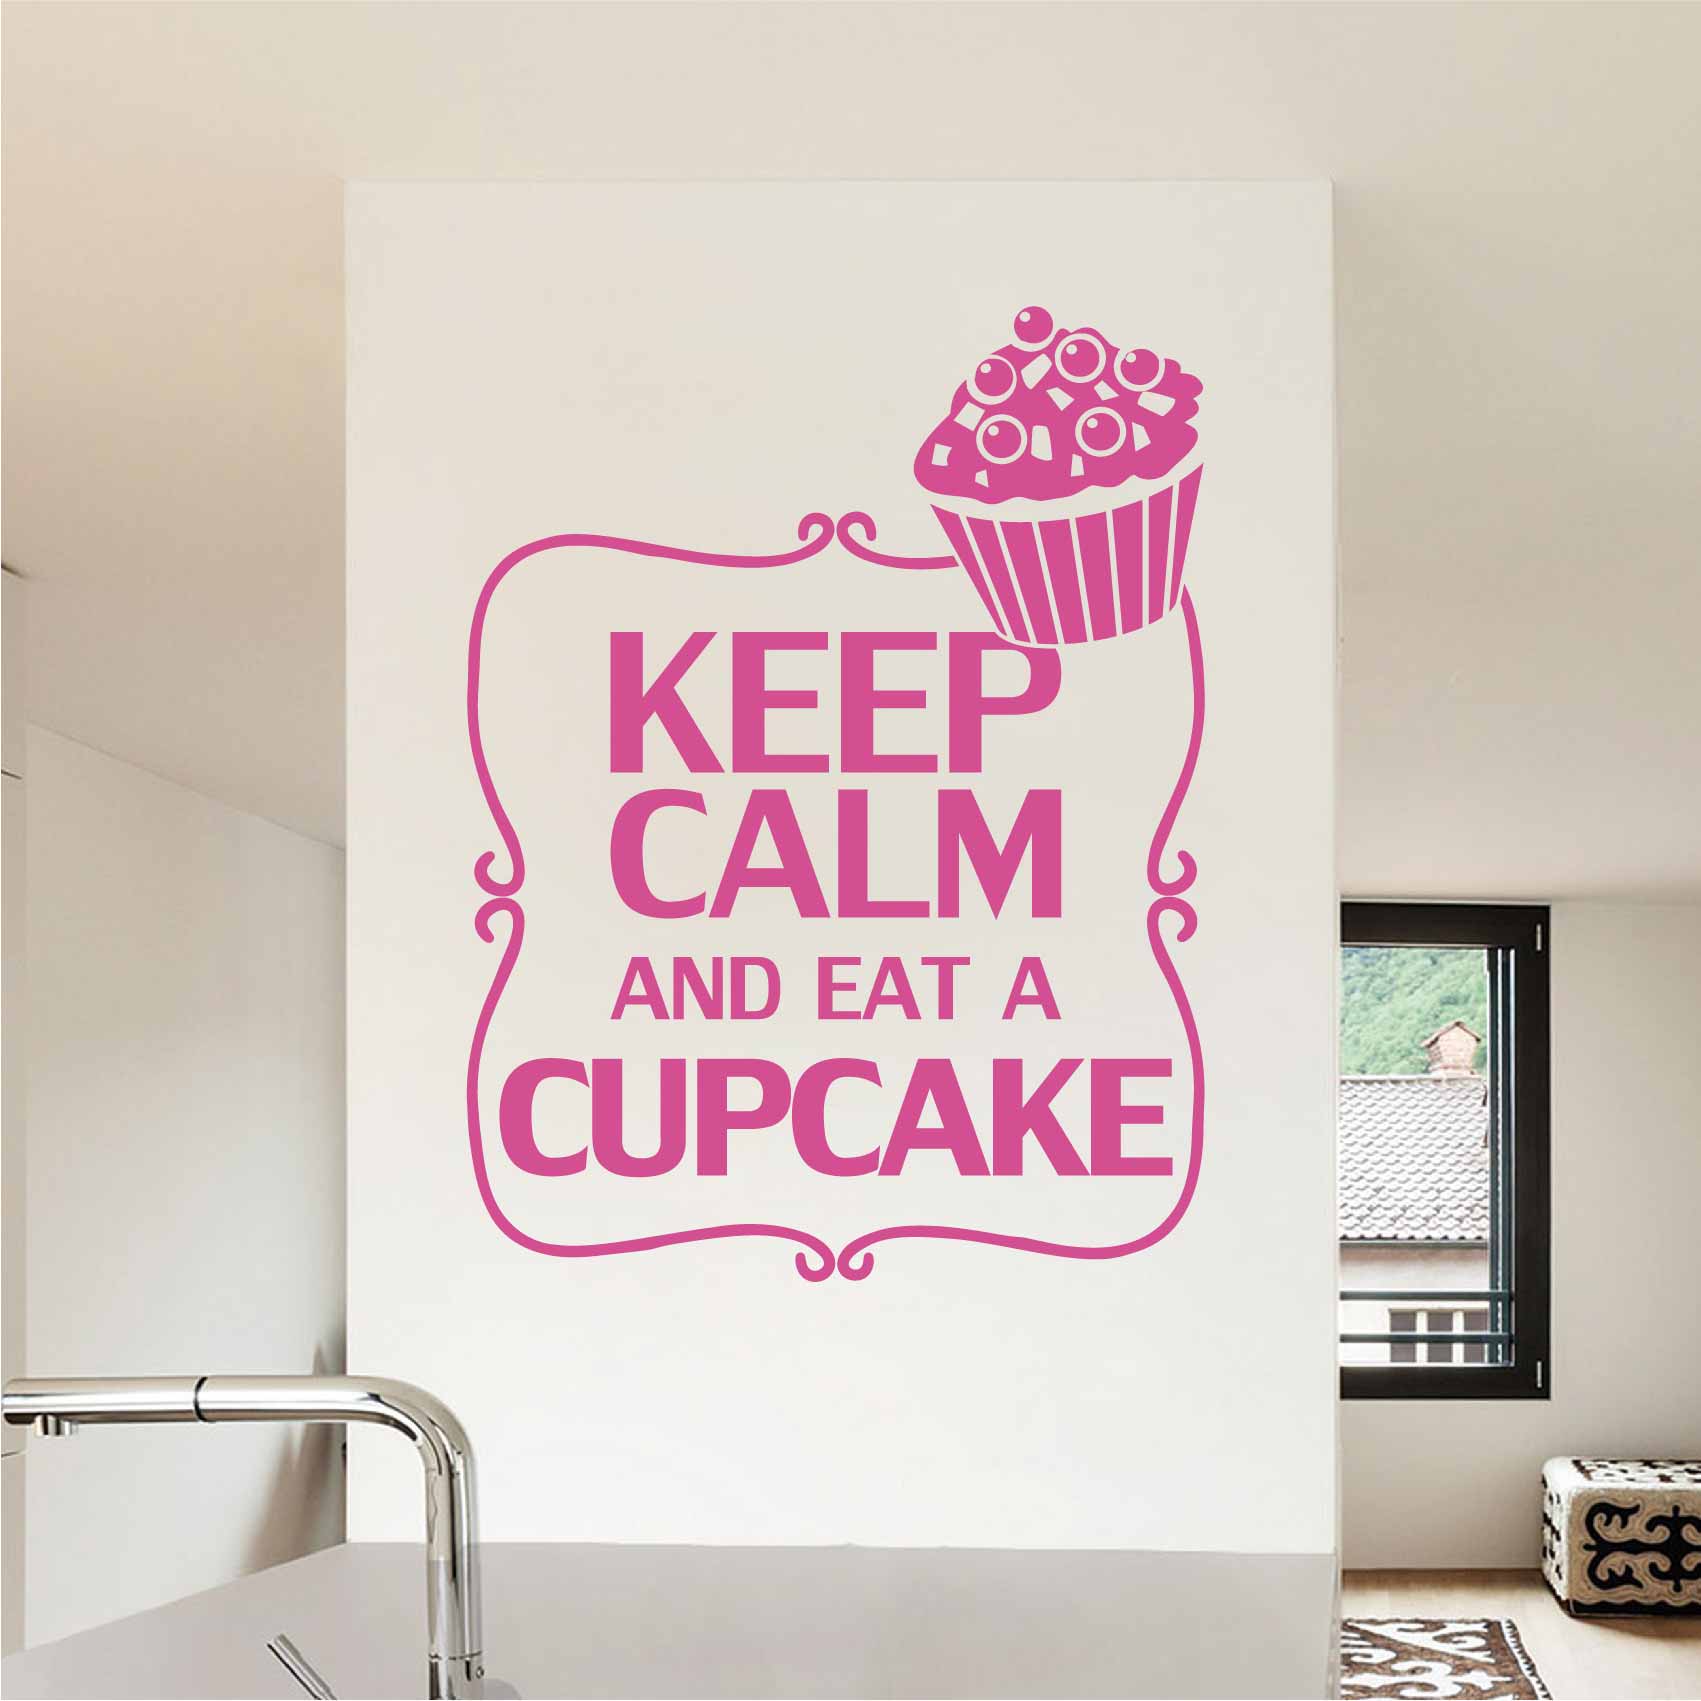 stickers-keep-calm-and-eat-cupcake-ref26cupcake-autocollant-muraux-cuisine-salle-a-manger-salon-sticker-mural-deco-gateau-cupcakes-gateaux